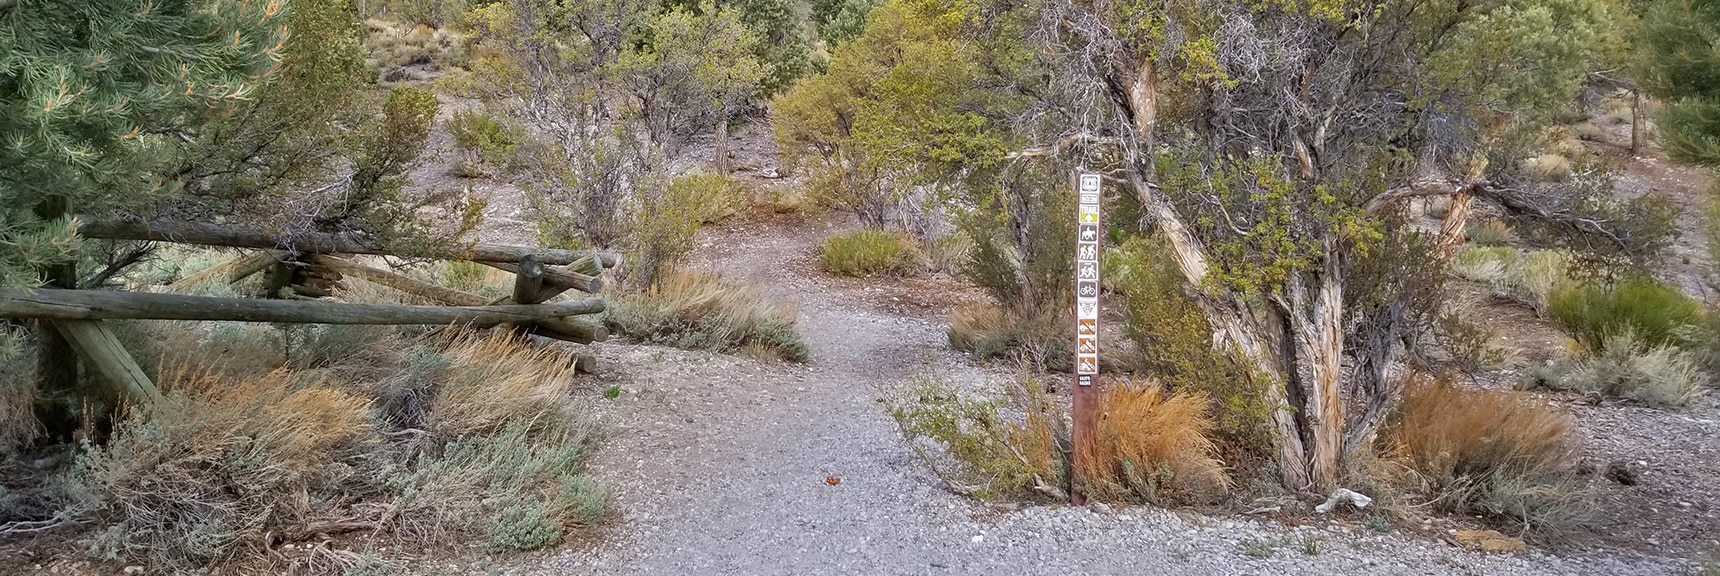 Sawmill Trail Loop Hiker's Trailhead | Sawmill Trail to McFarland Peak | Spring Mountains, Nevada